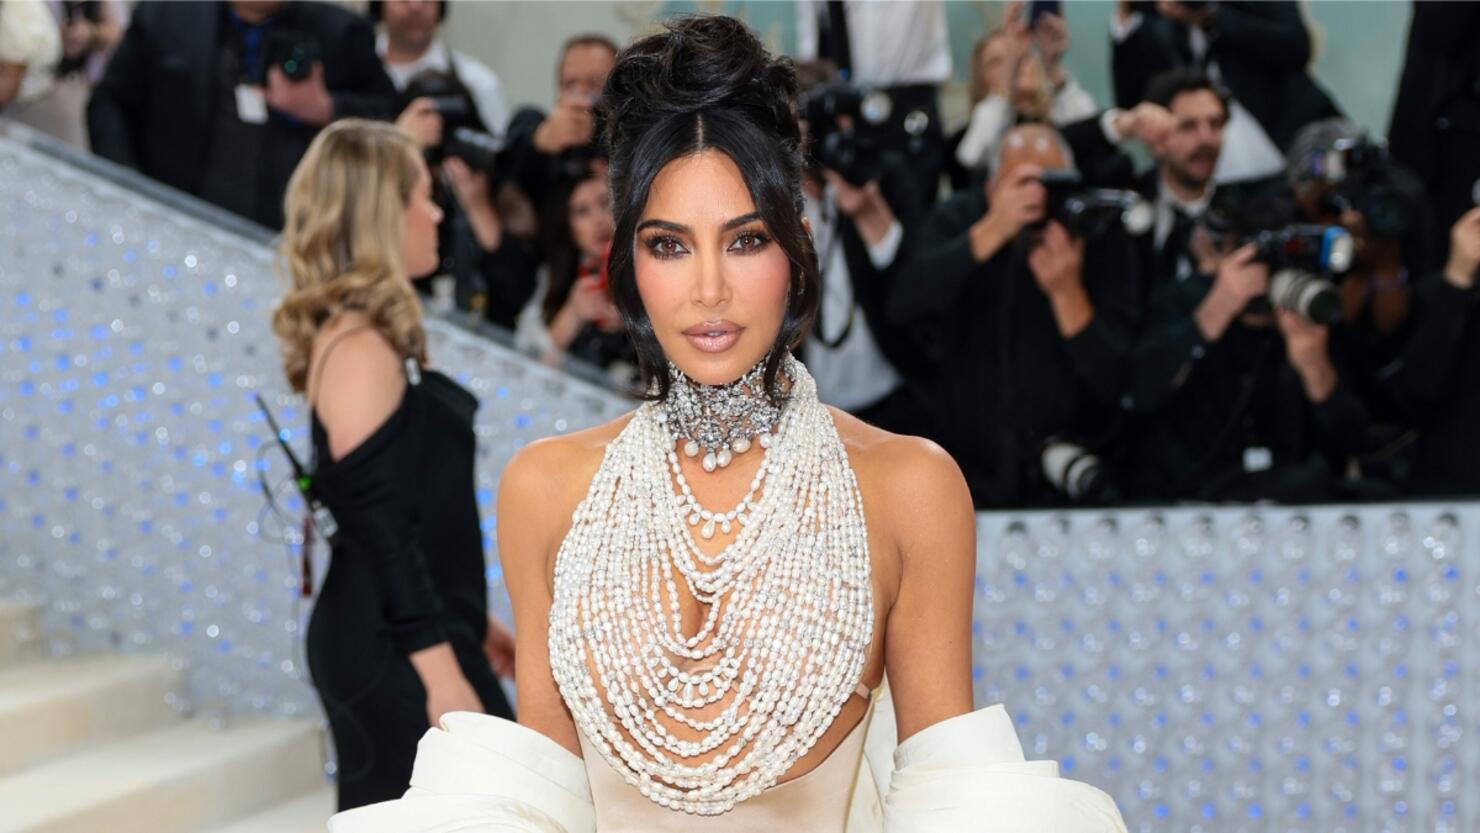 Kim Kardashian Rocks Head-to-Toe Leather Ensemble While Arriving in N.Y.C.  Ahead of the Met Gala